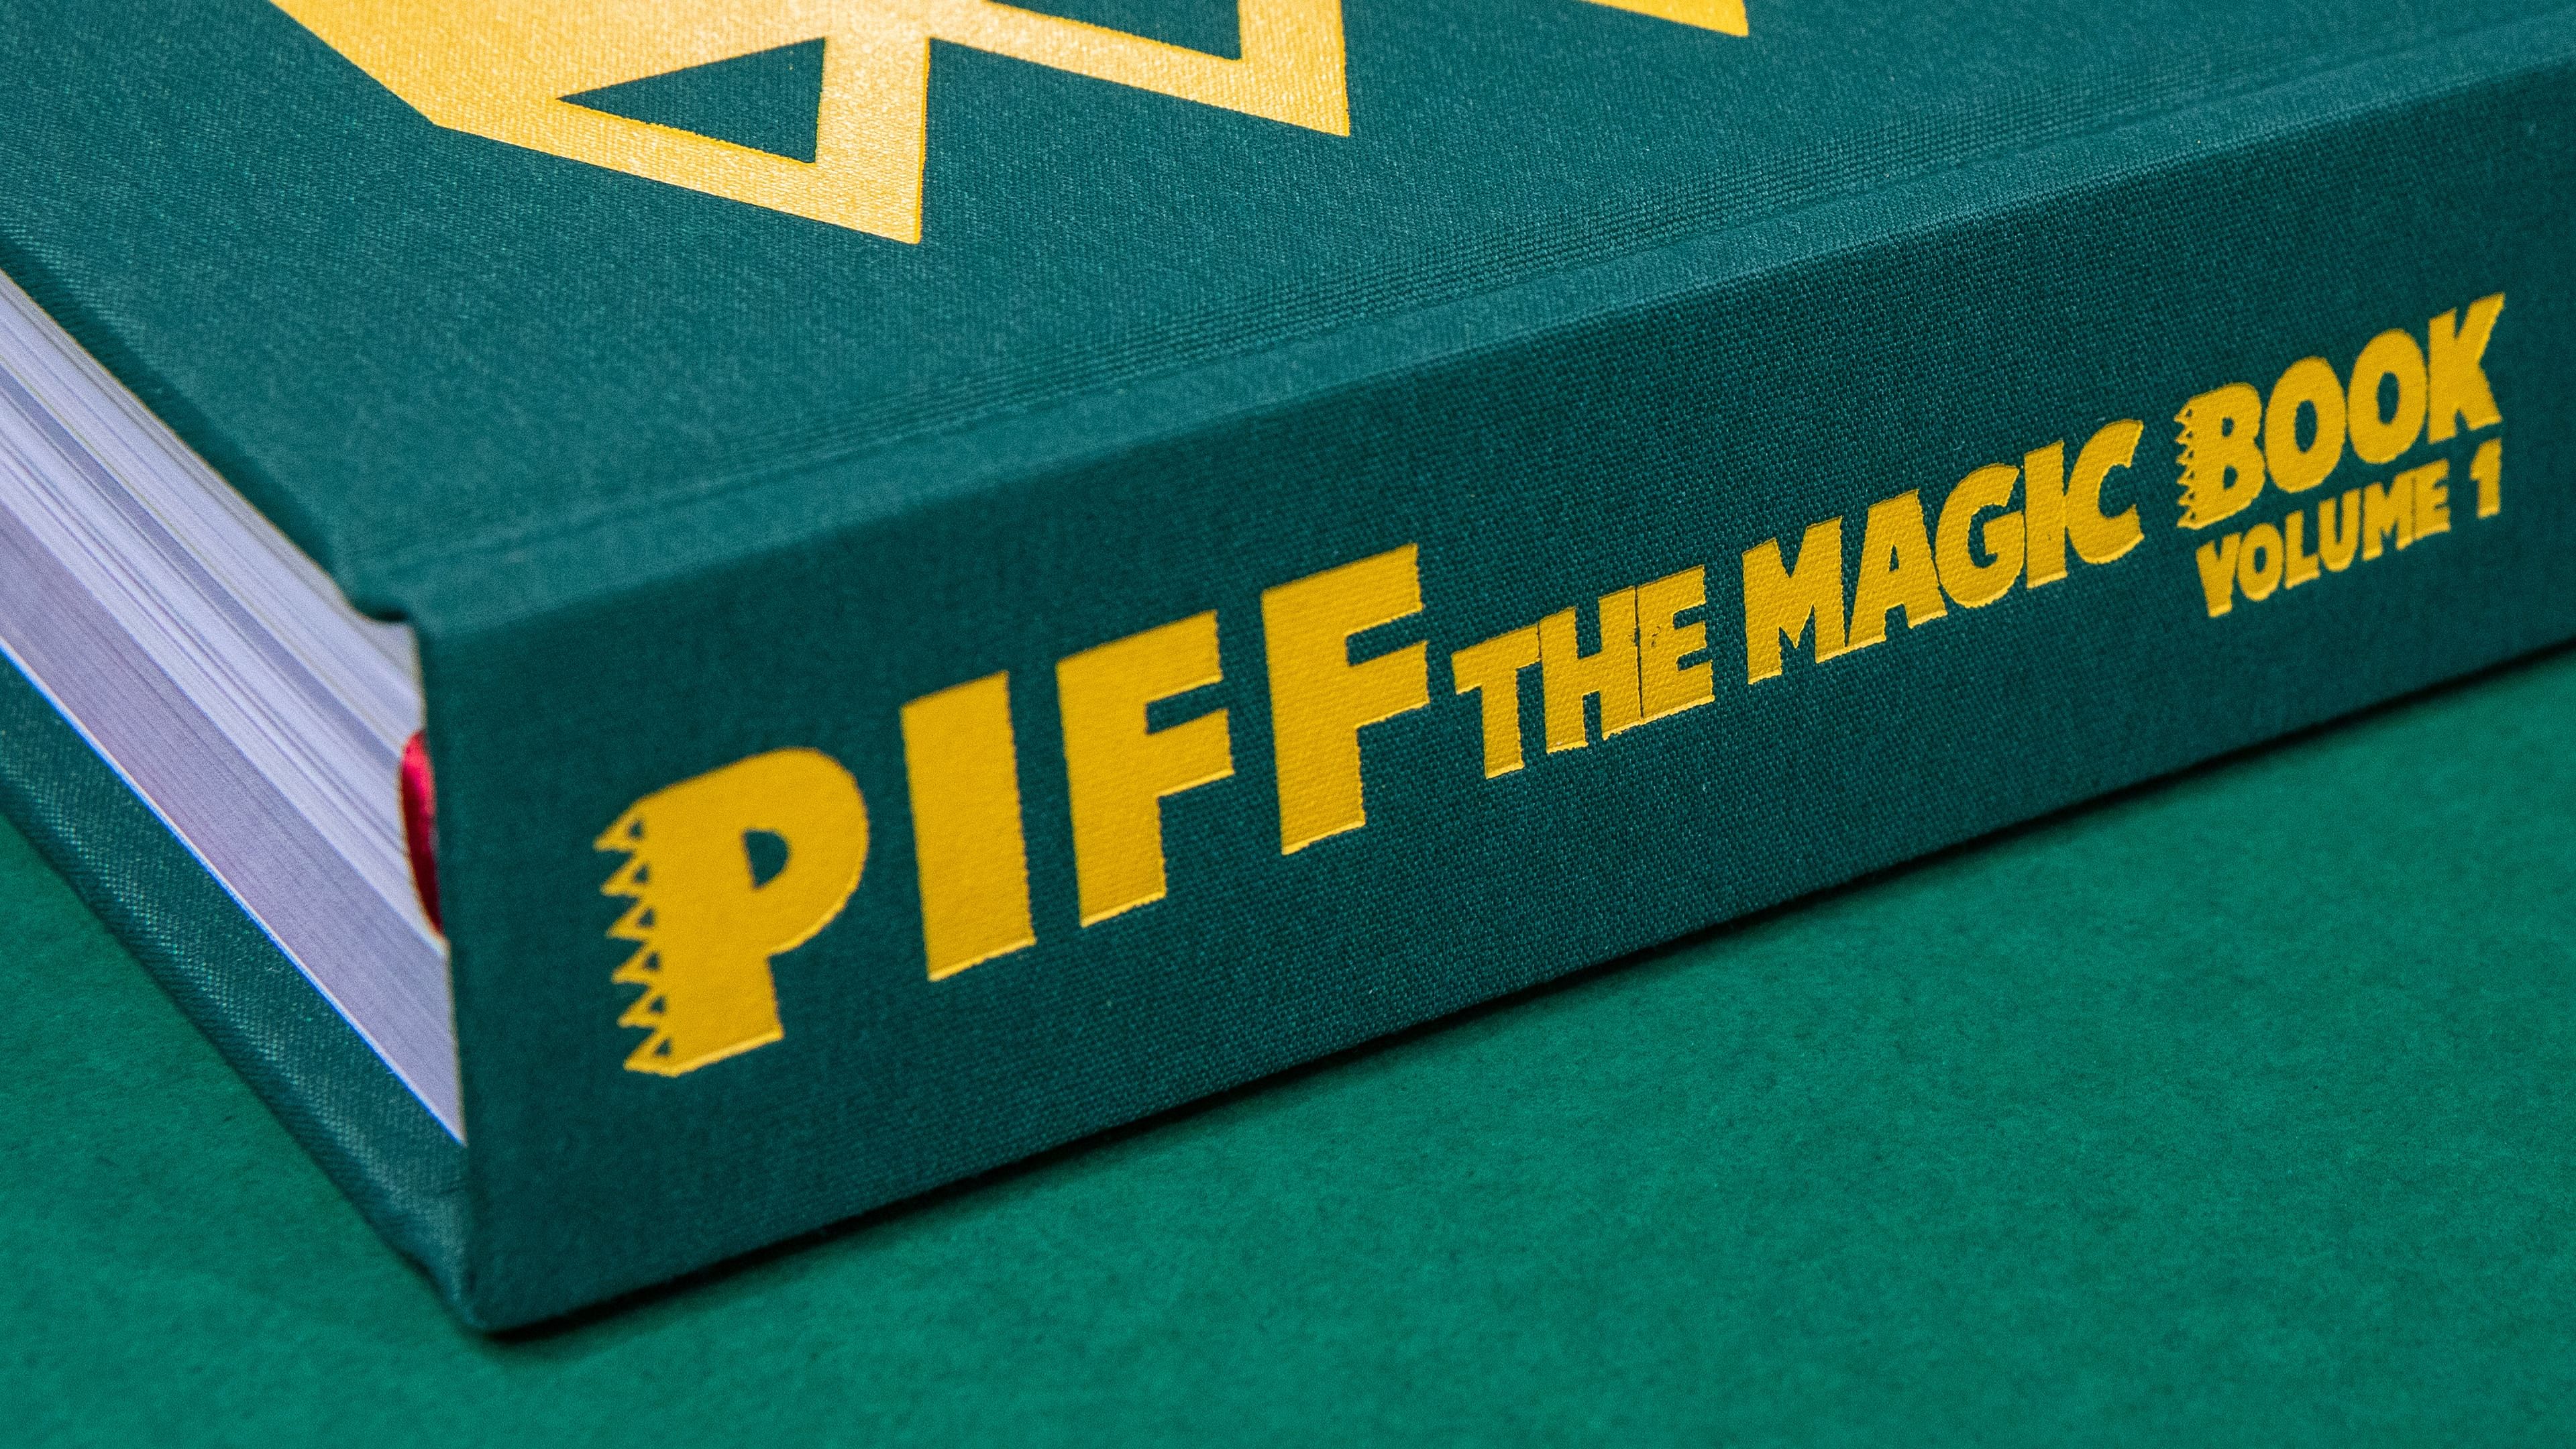 Piff The Magic Book (Volume 1) by Piff The Magic Dragon